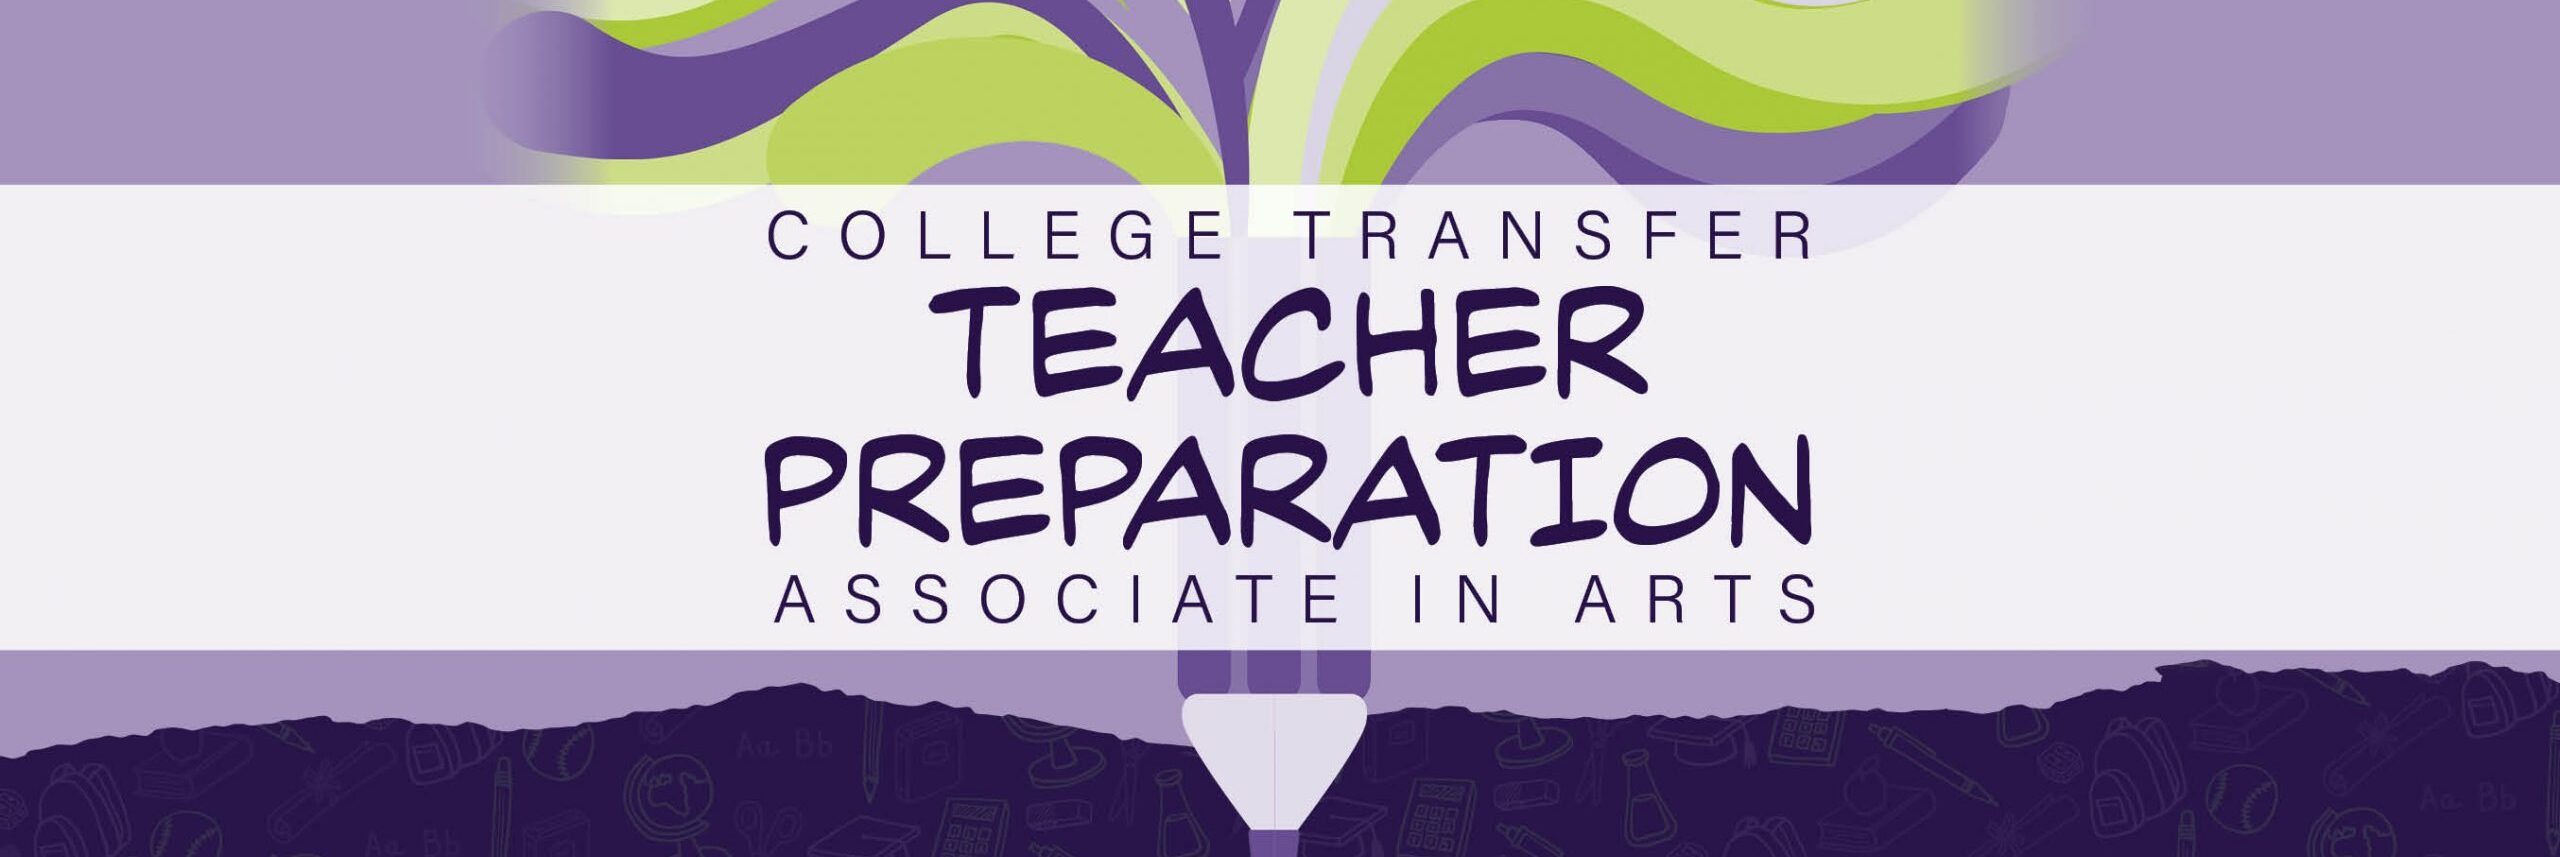 College Transfer Teacher Preparation Associate in Arts